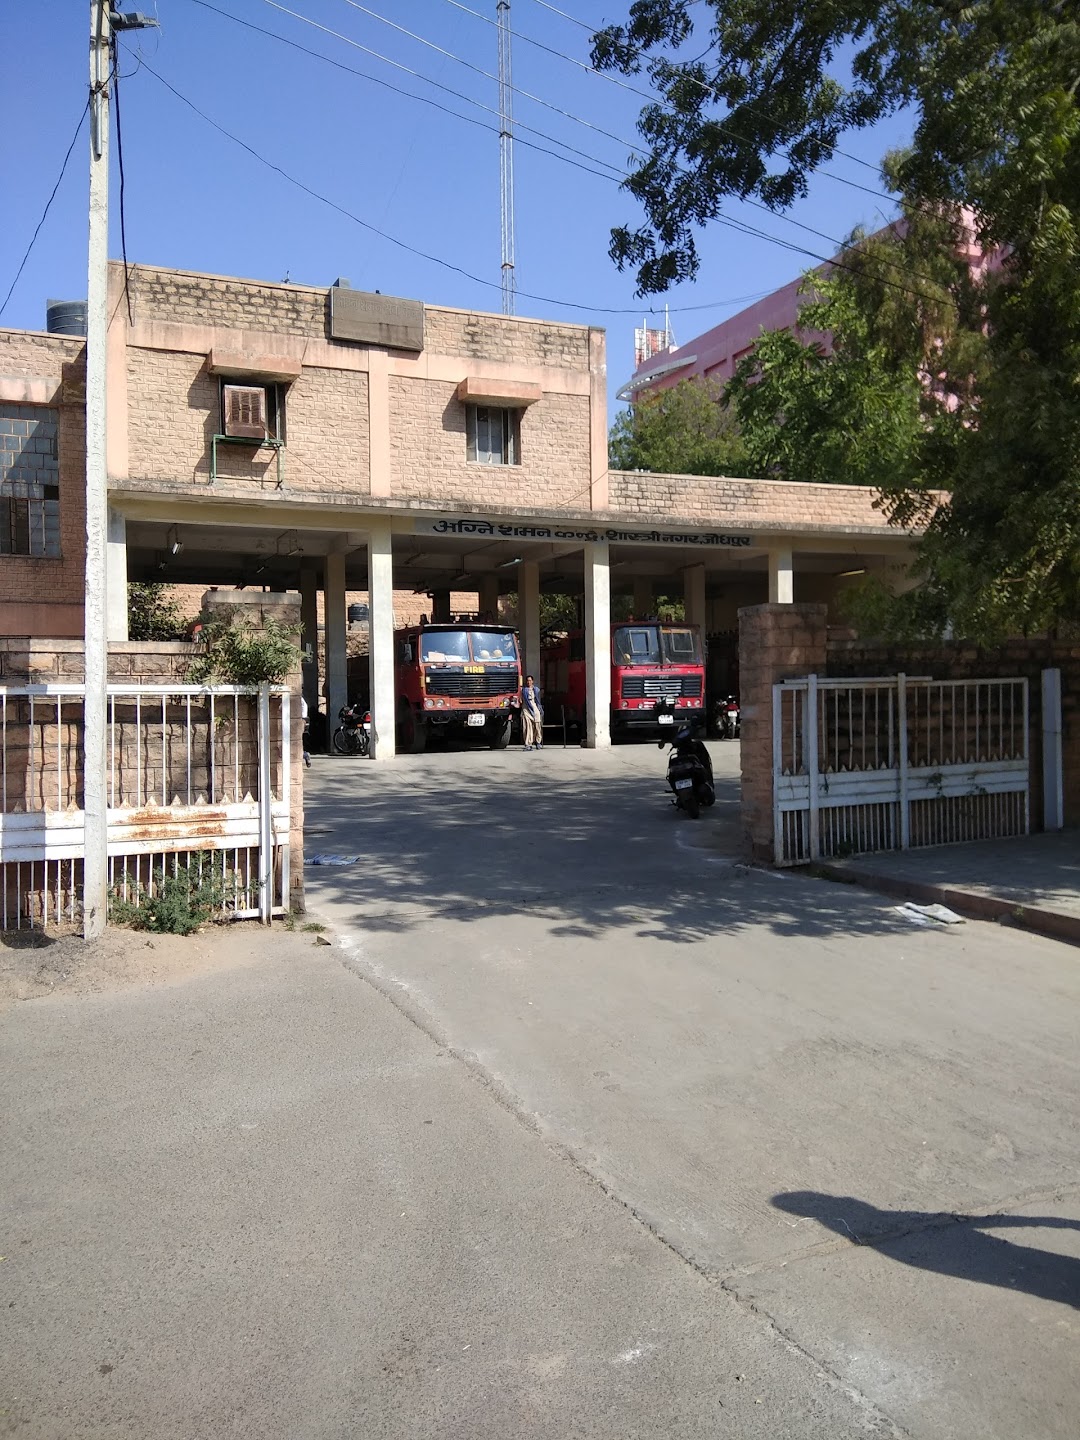 Fire Station Shastri Nagar